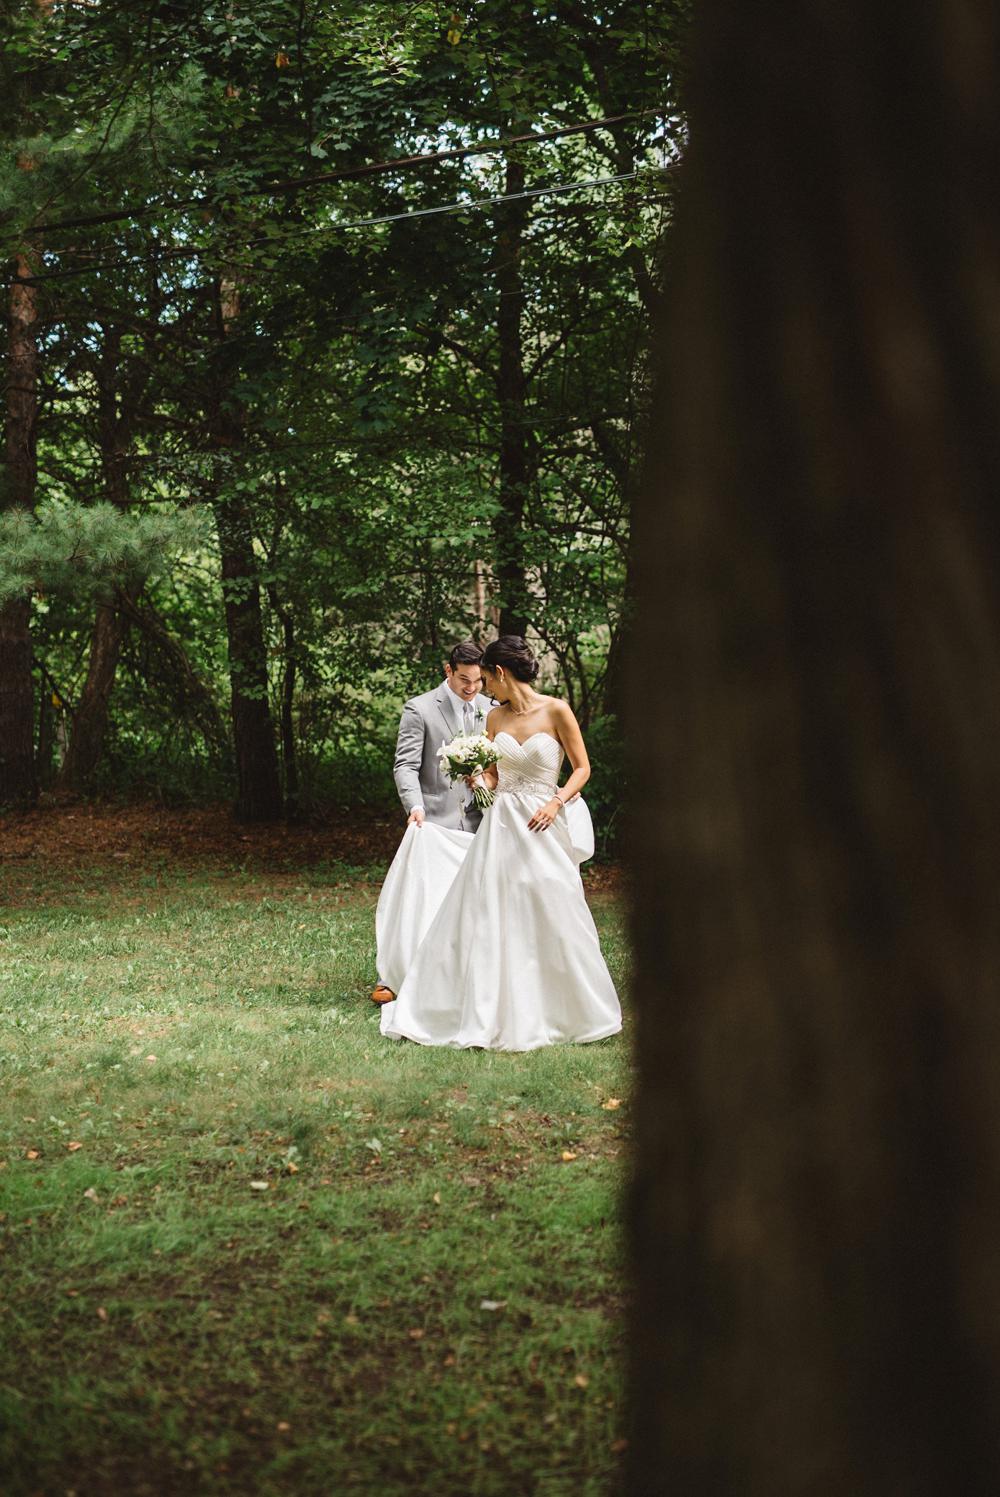 backyard wedding photography Toronto | Olive Photography